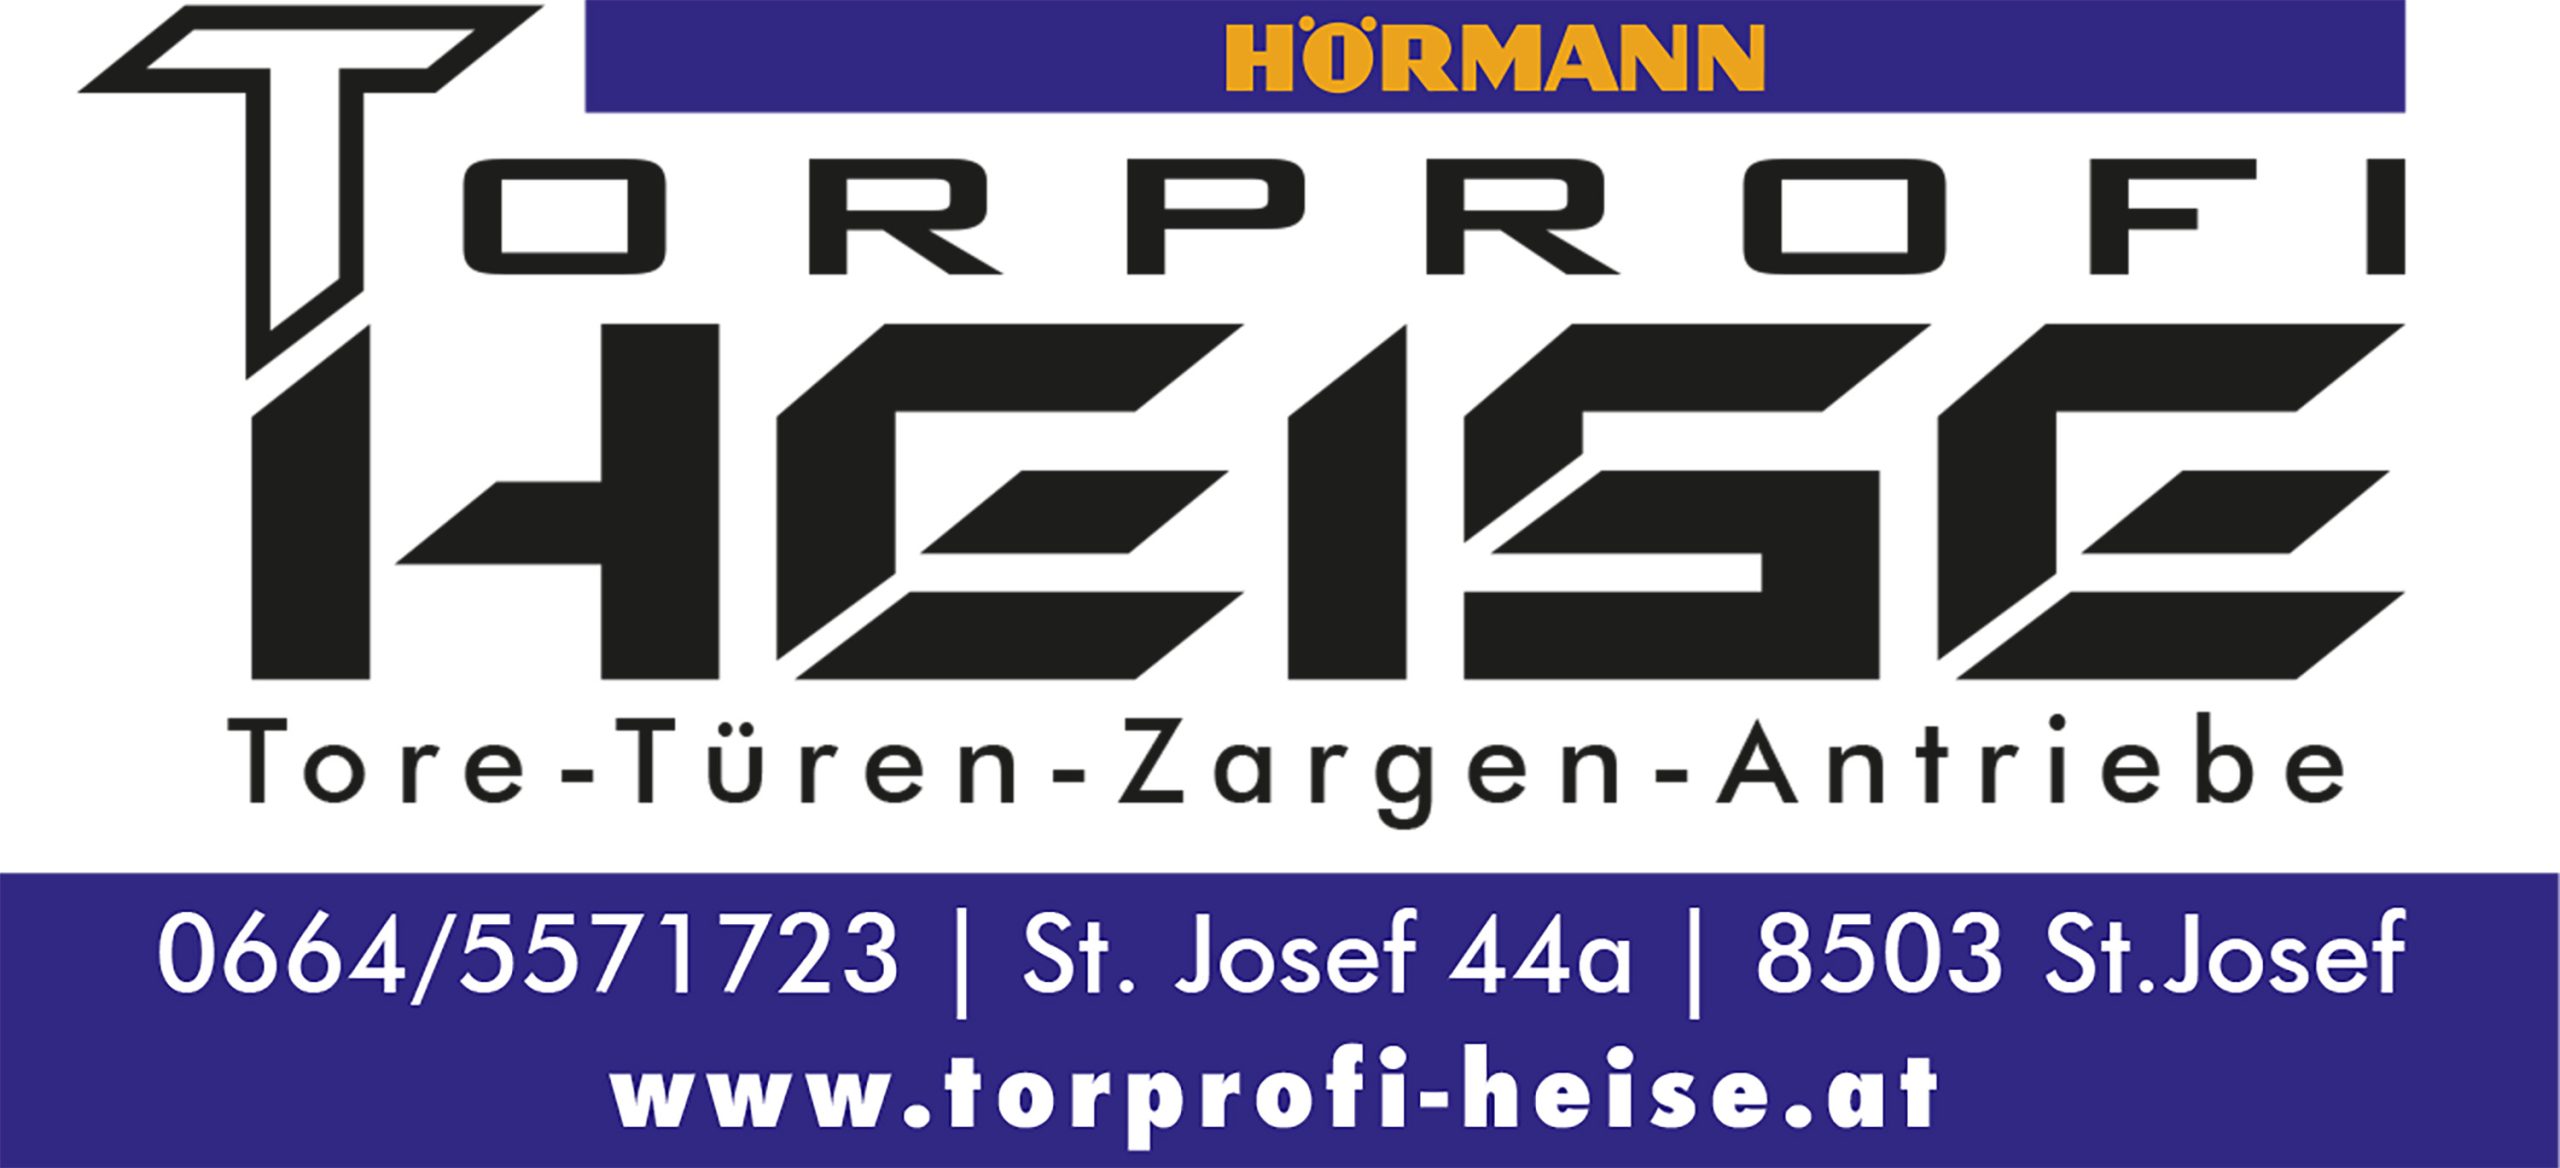 Logo Hörmann Torporfi